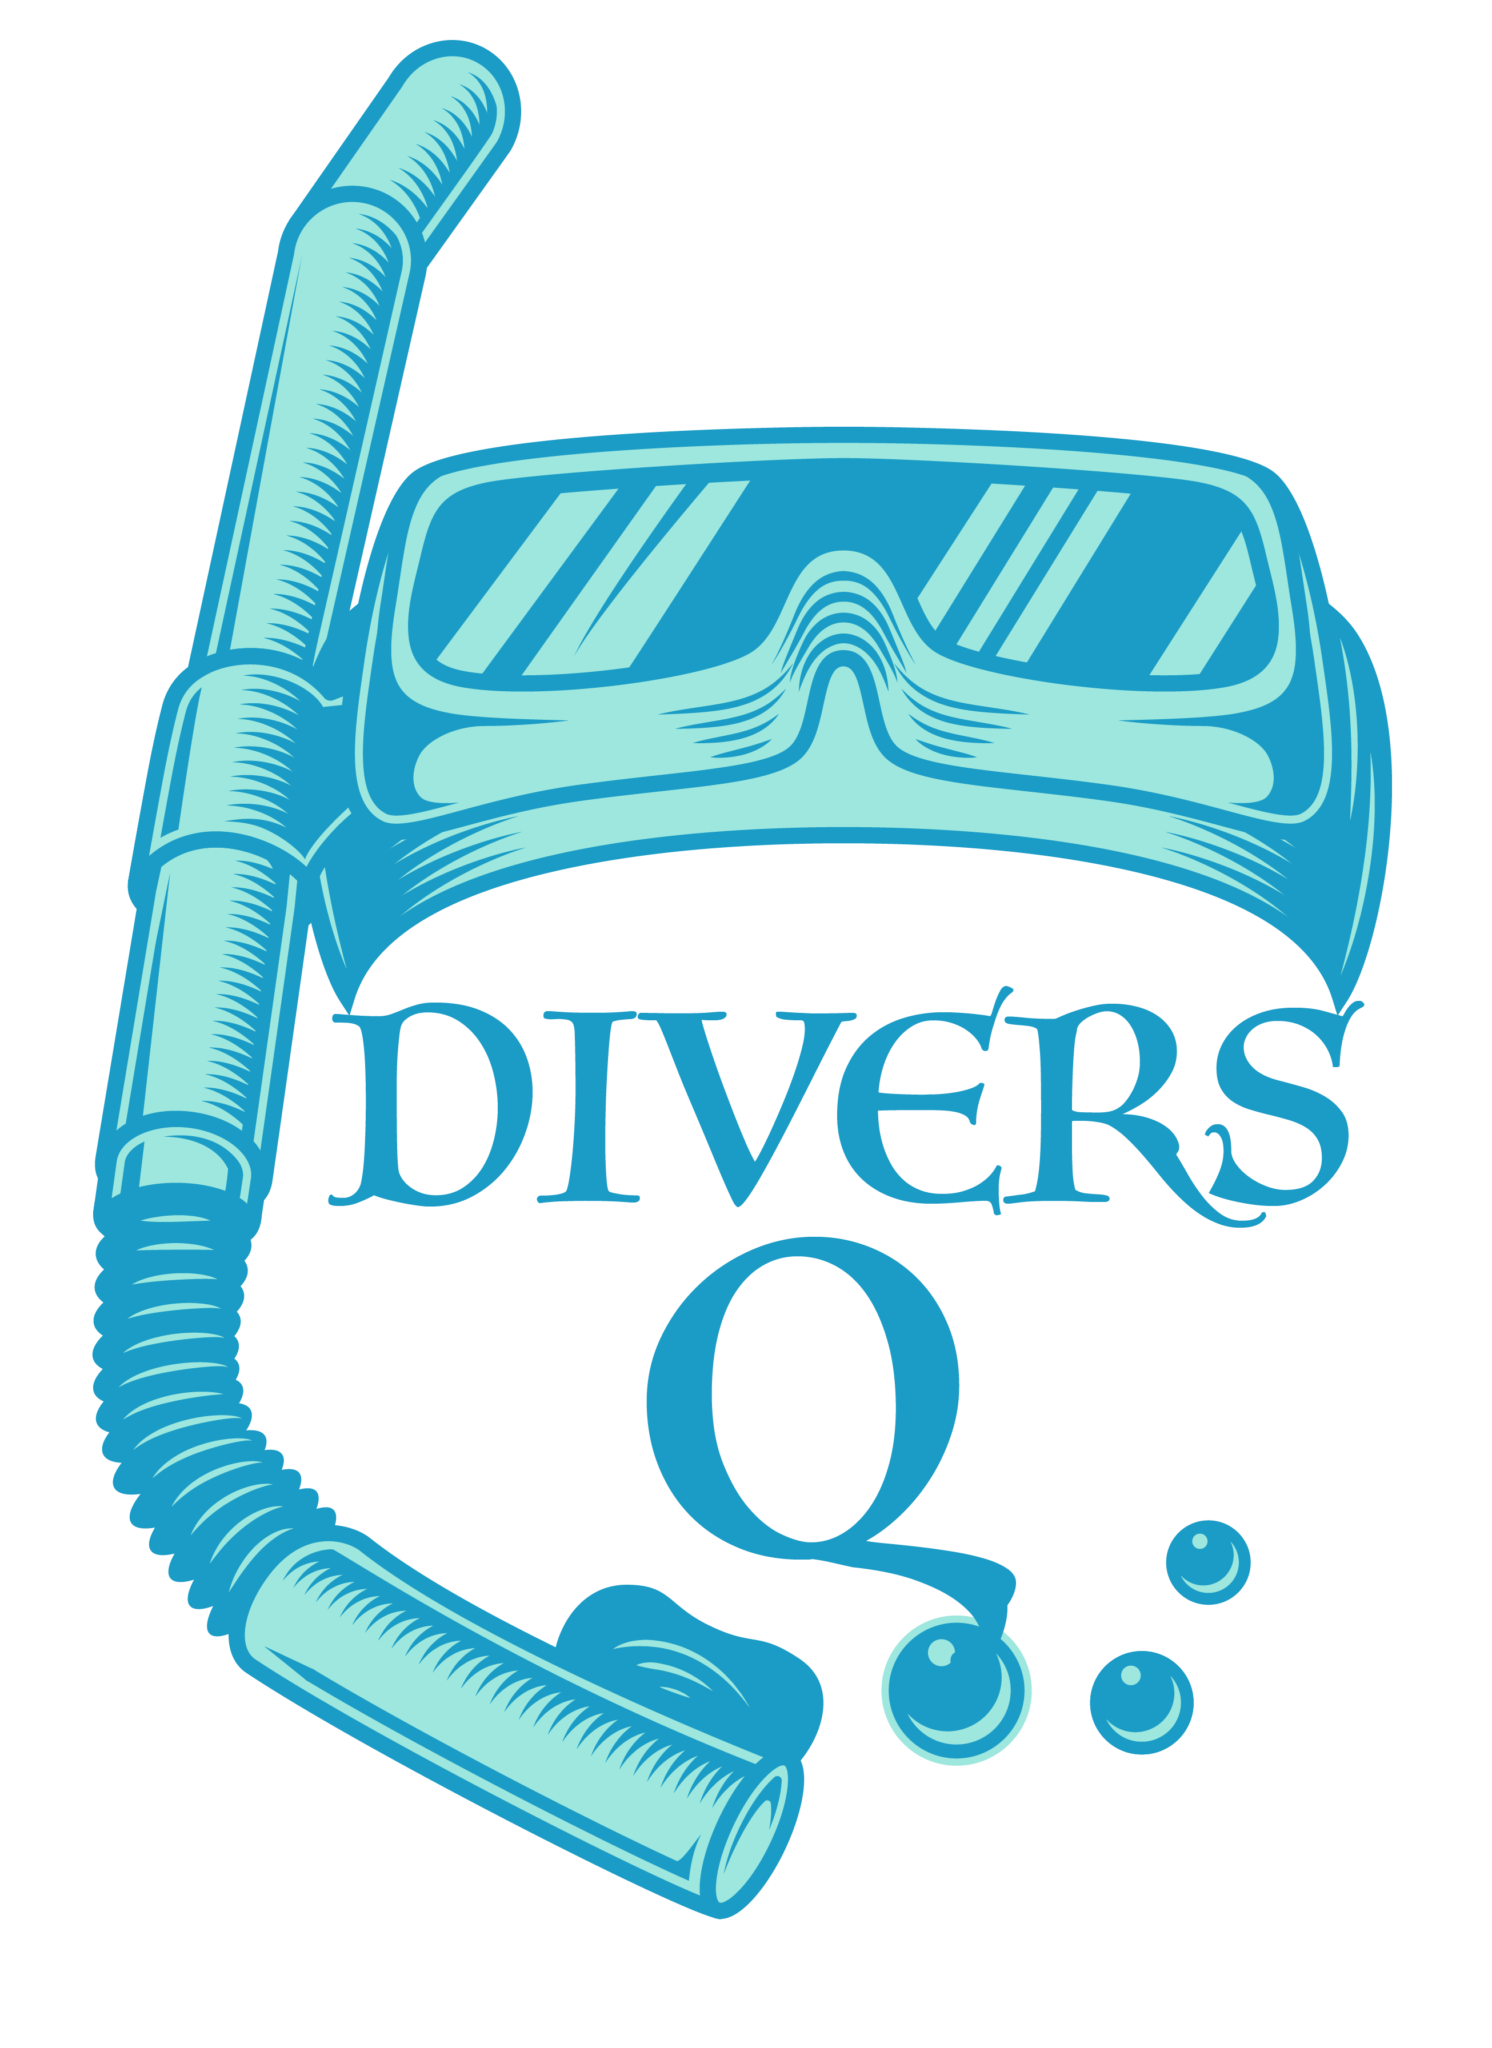 Divers-Q-logo-01-1492x2048-1